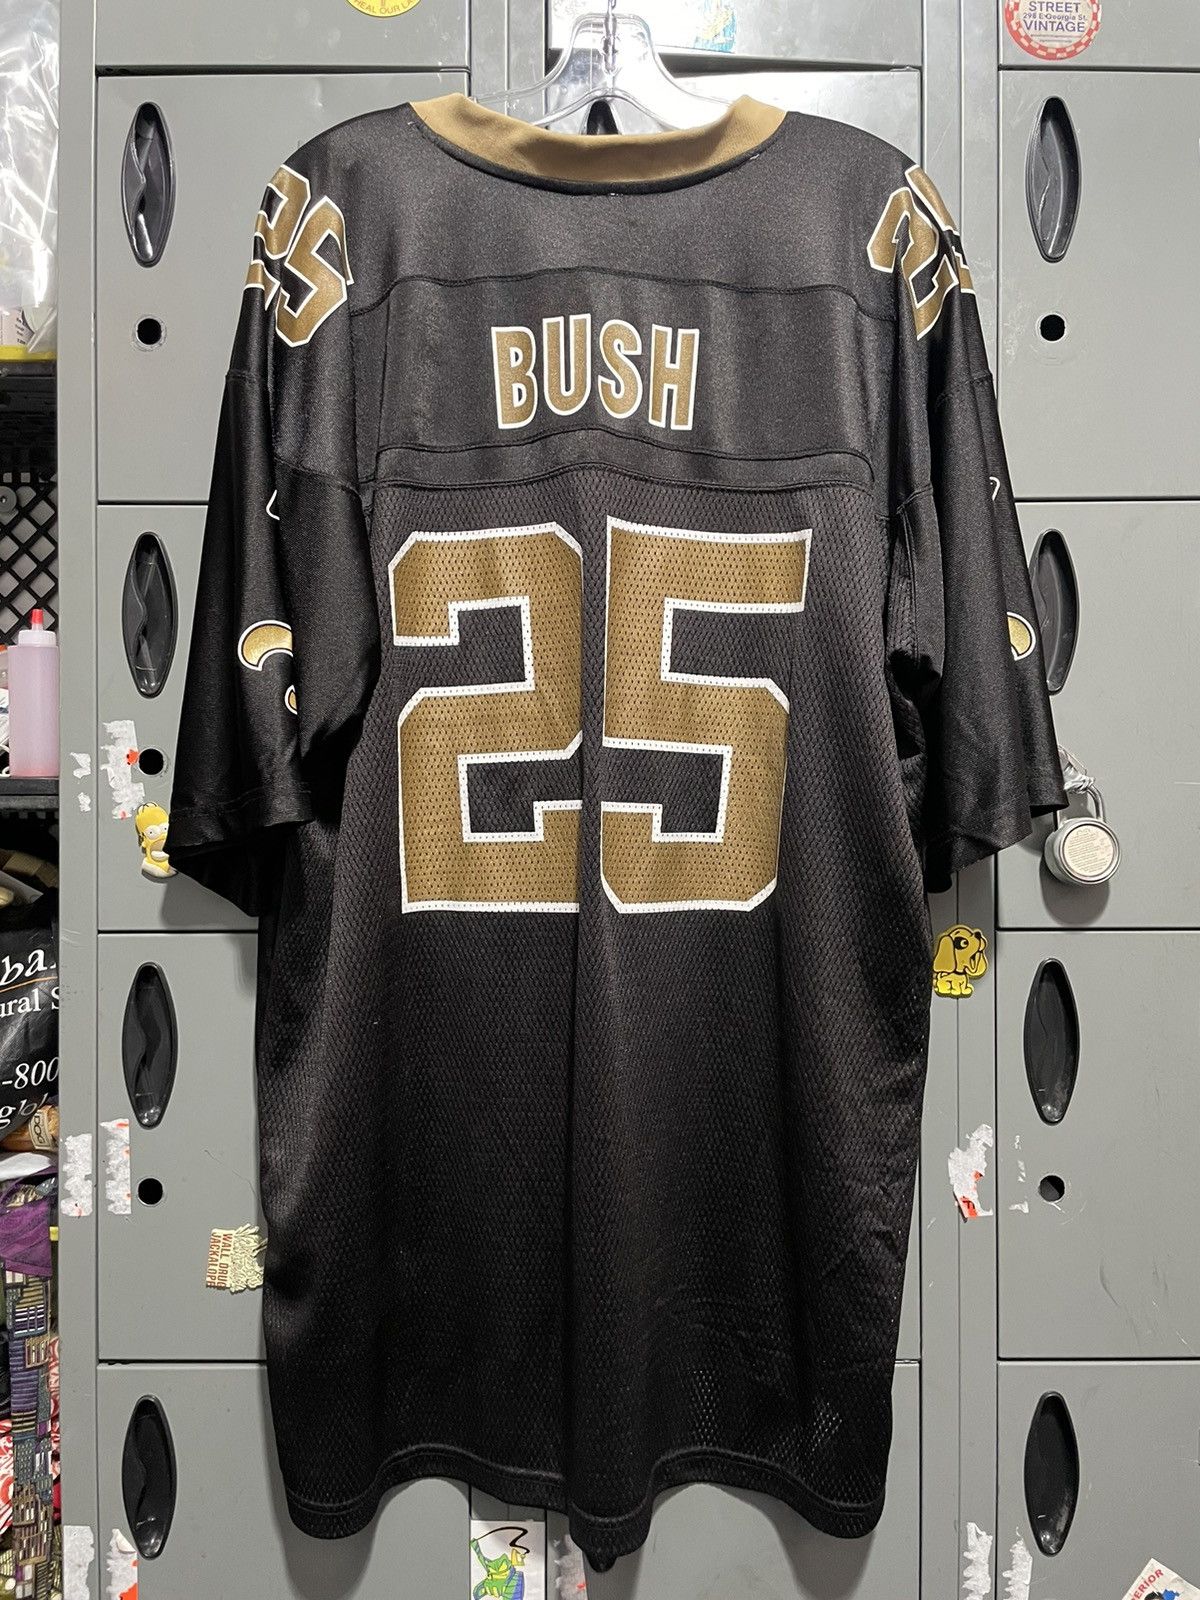 Vintage Reggie Bush 25 jersey New Orleans Saints NFL Football